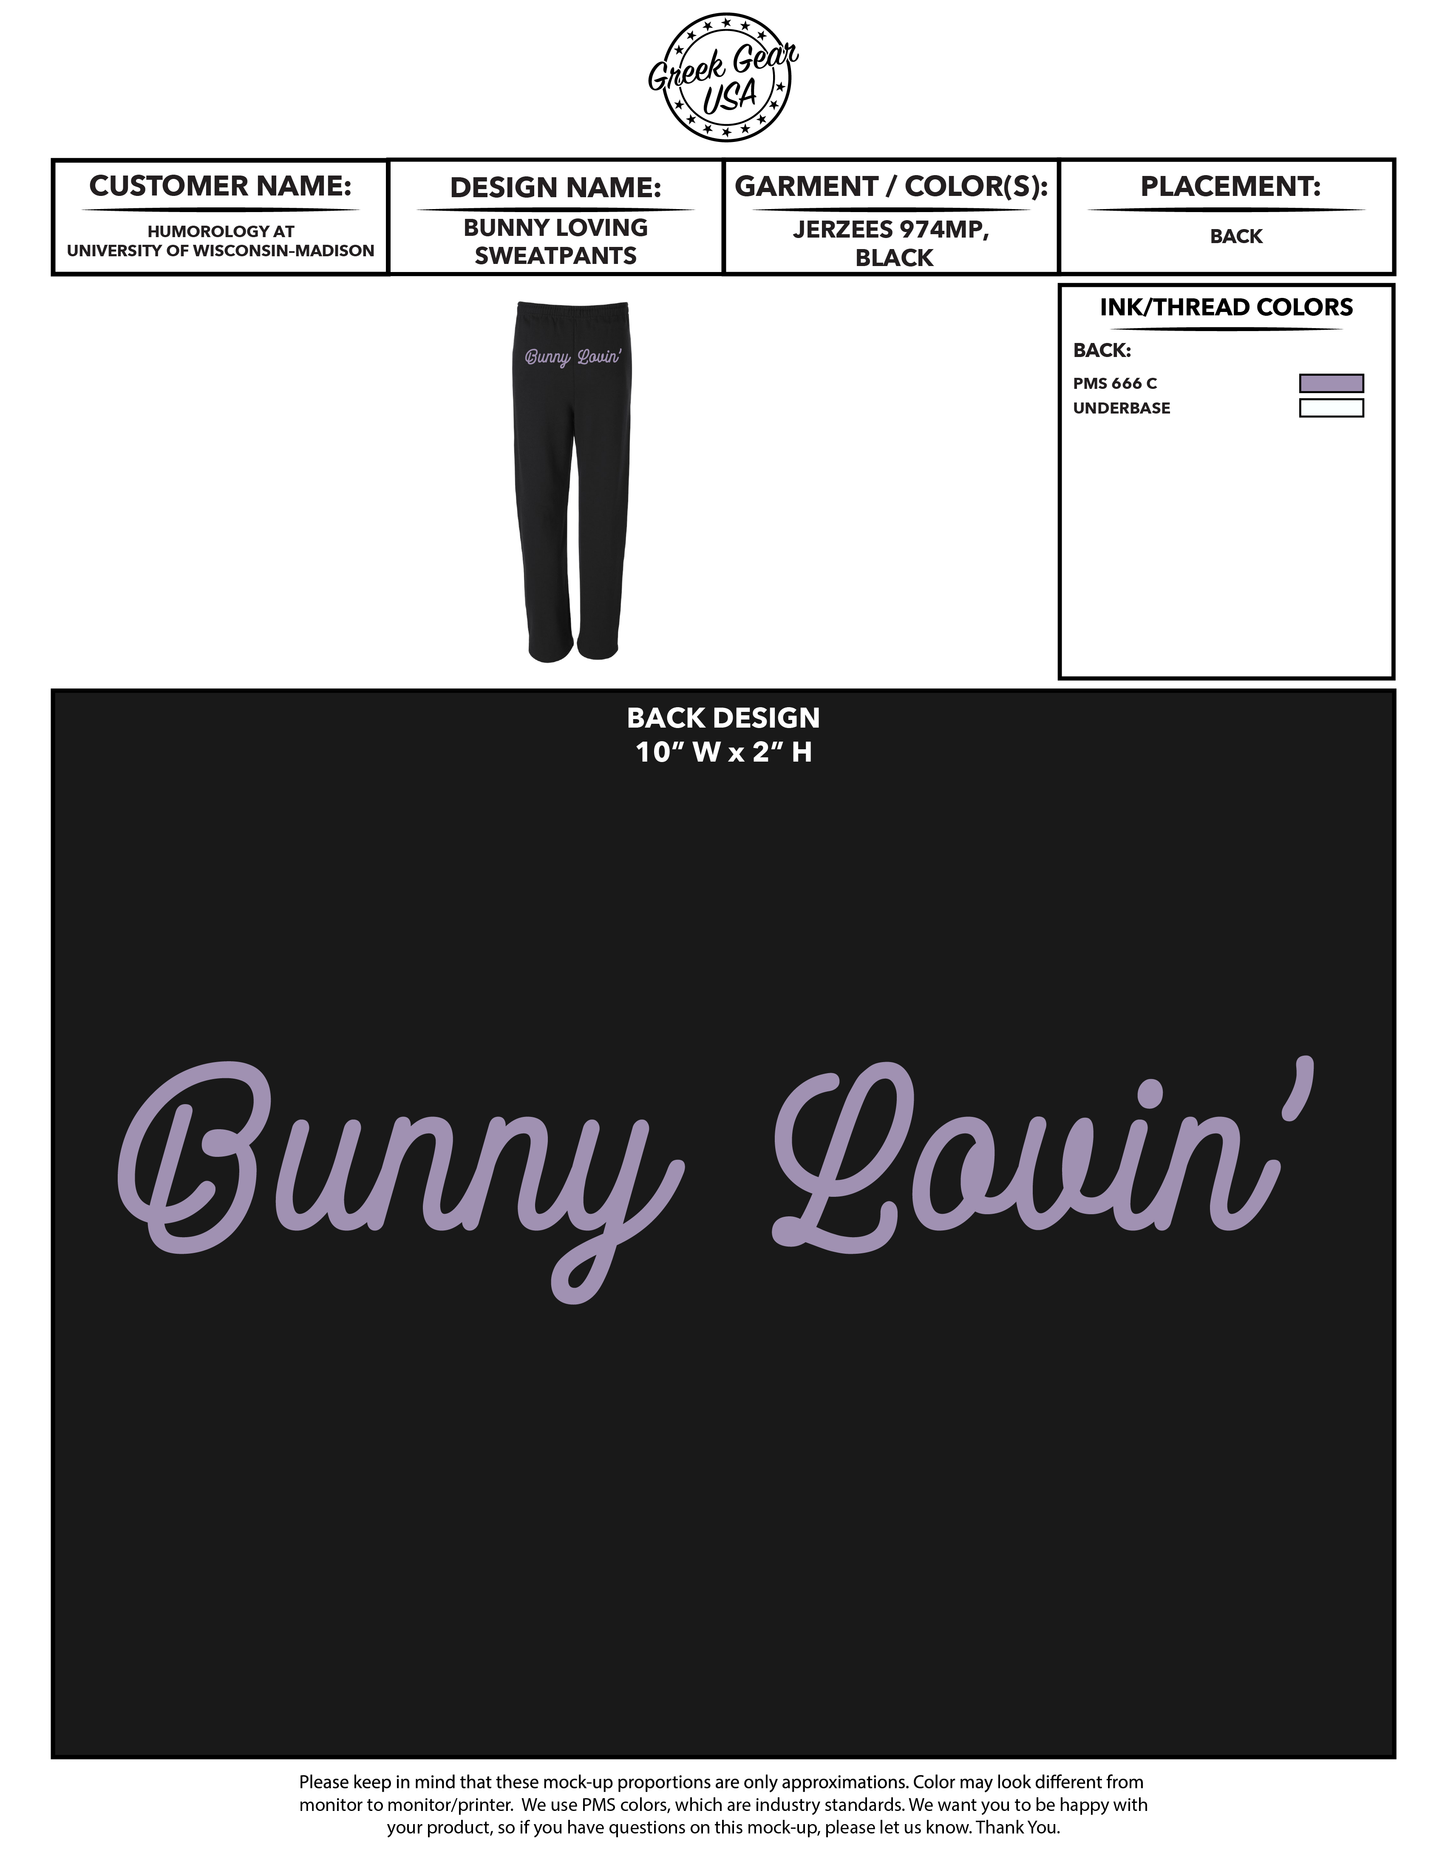 Humorology at University of Wisconsin–Madison Bunny Loving Sweatpants